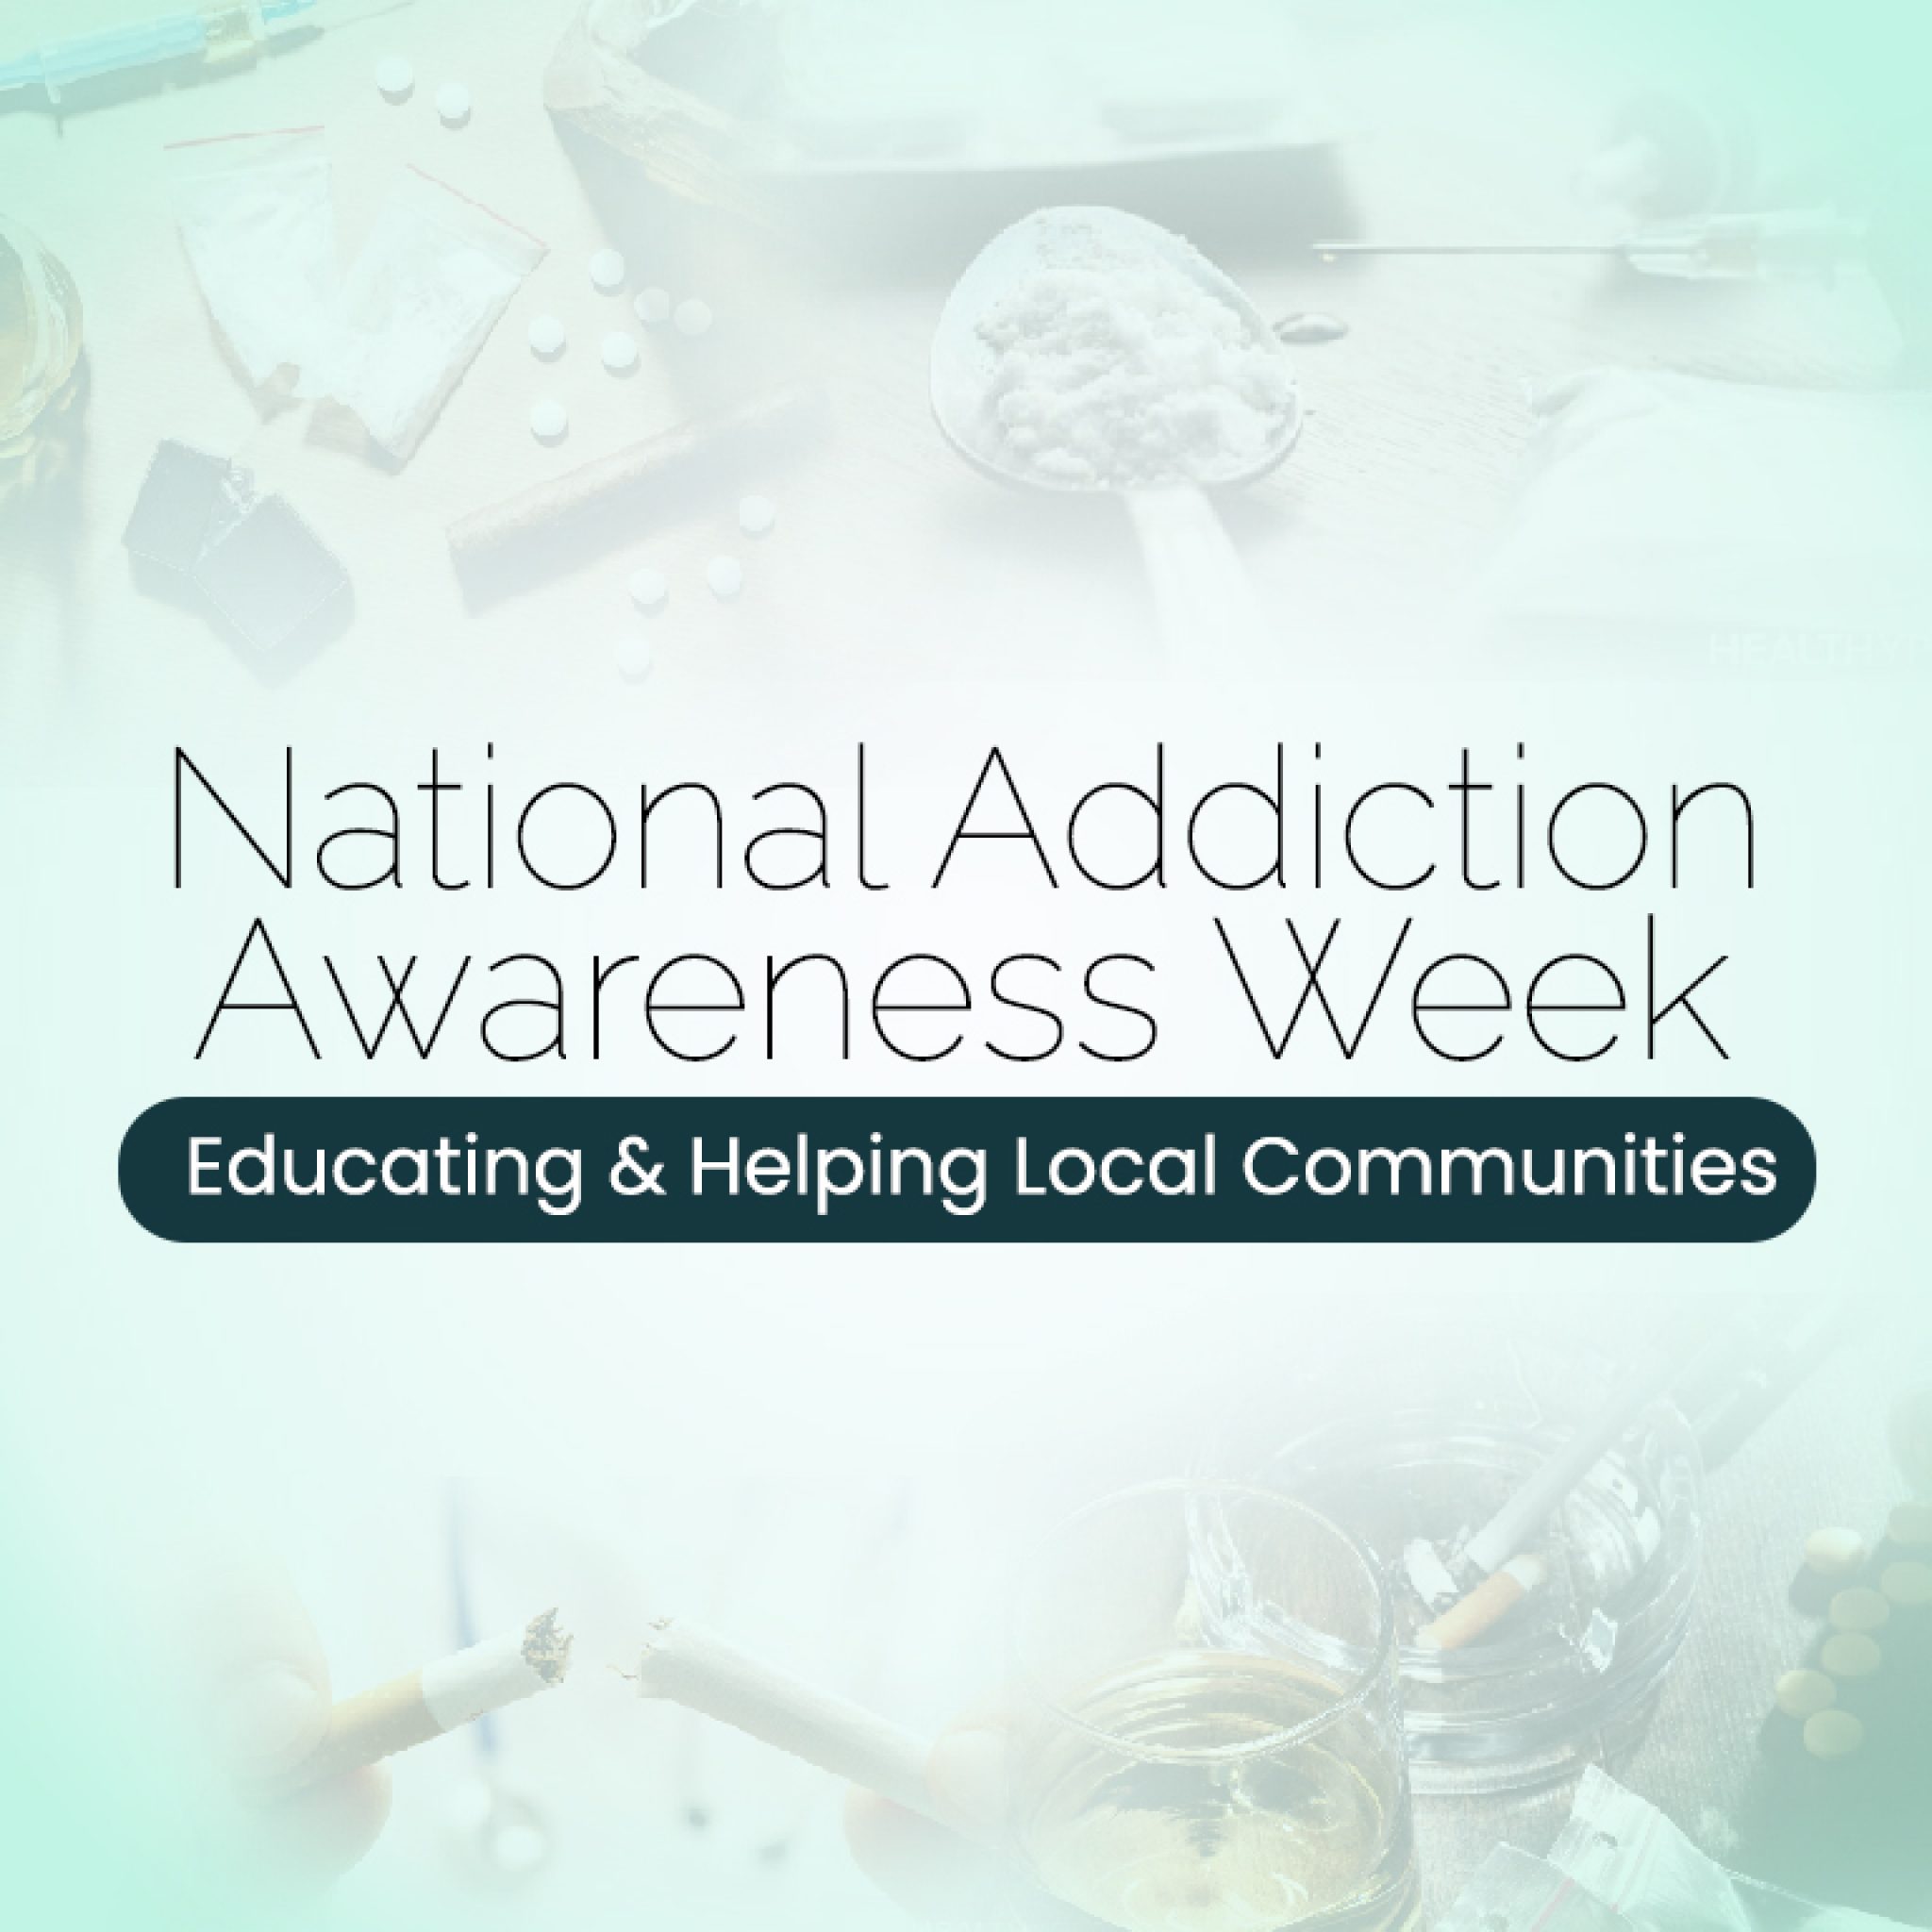 National Addiction Awareness Week smartc